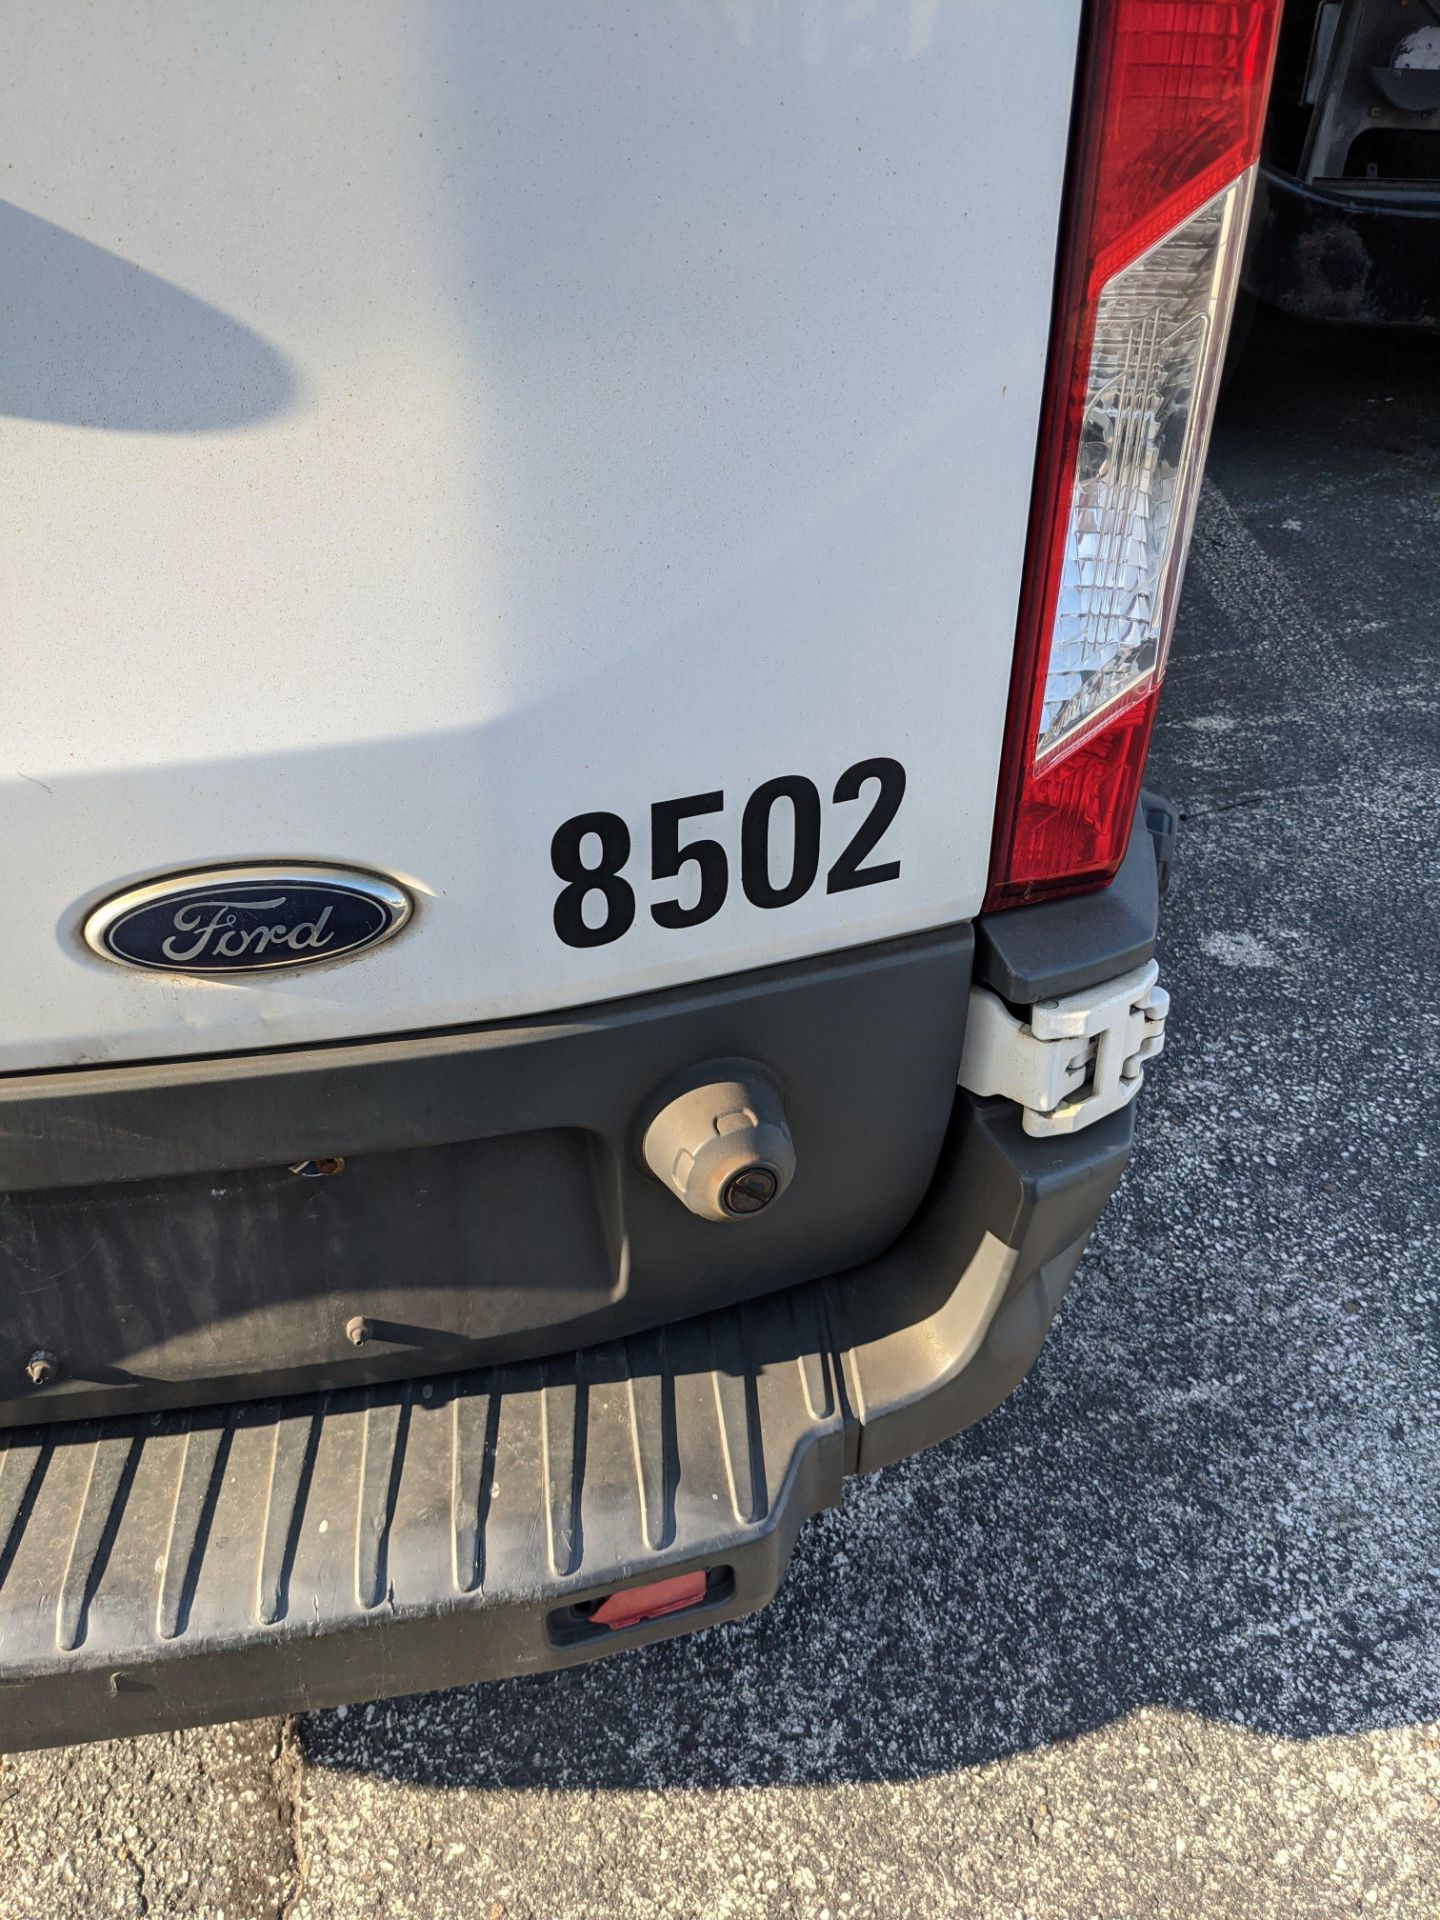 2015 Ford Transit350 Van - 9500 GVW, 293509 odometer reading. Flat Top Roof, 9500 GVW, 3.7L Gas, - Image 3 of 6